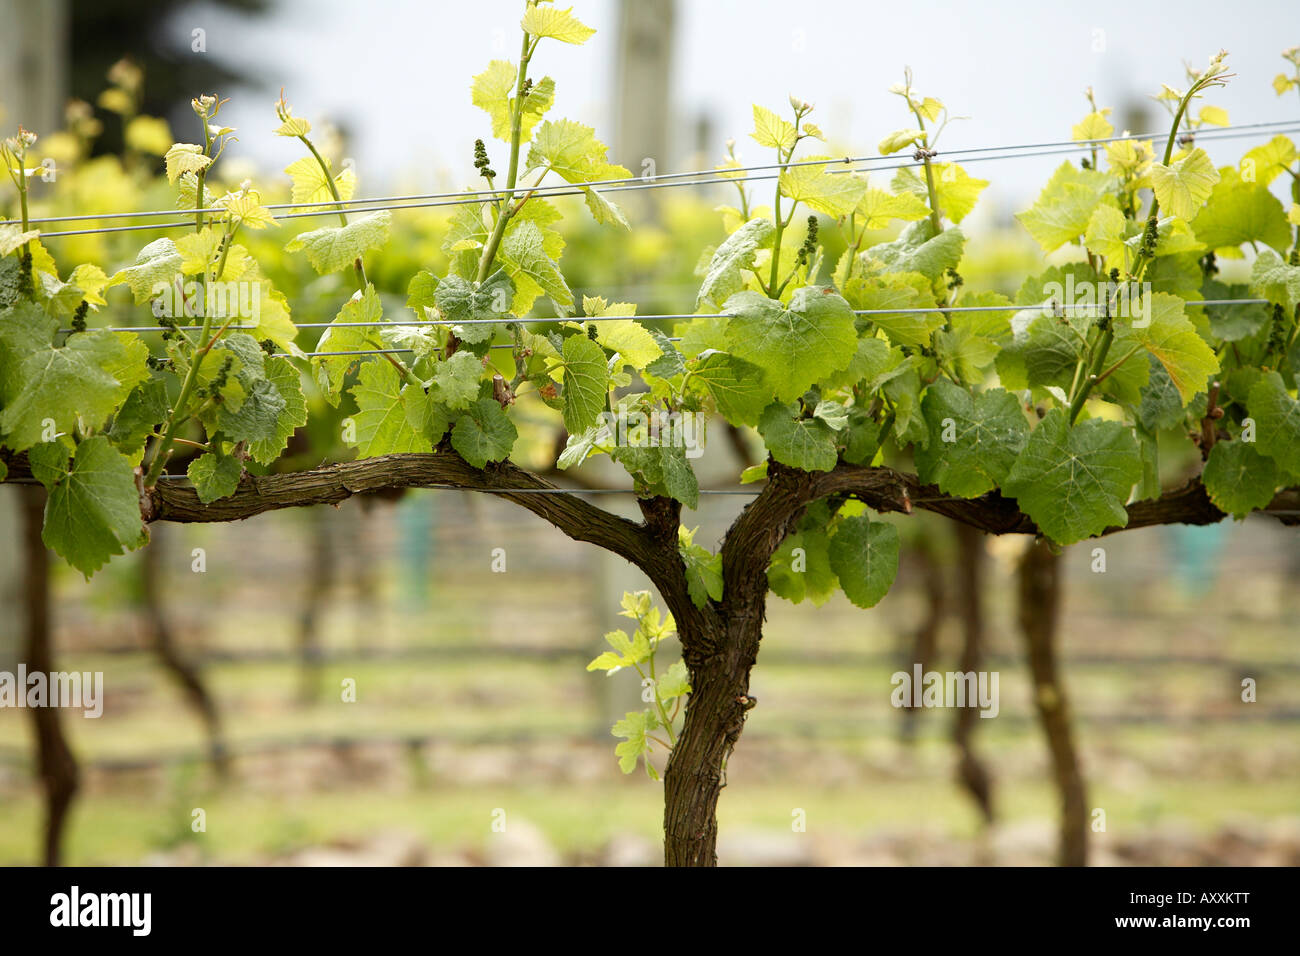 grape vines on trellis work and posts in vineyard Stock Photo - Alamy